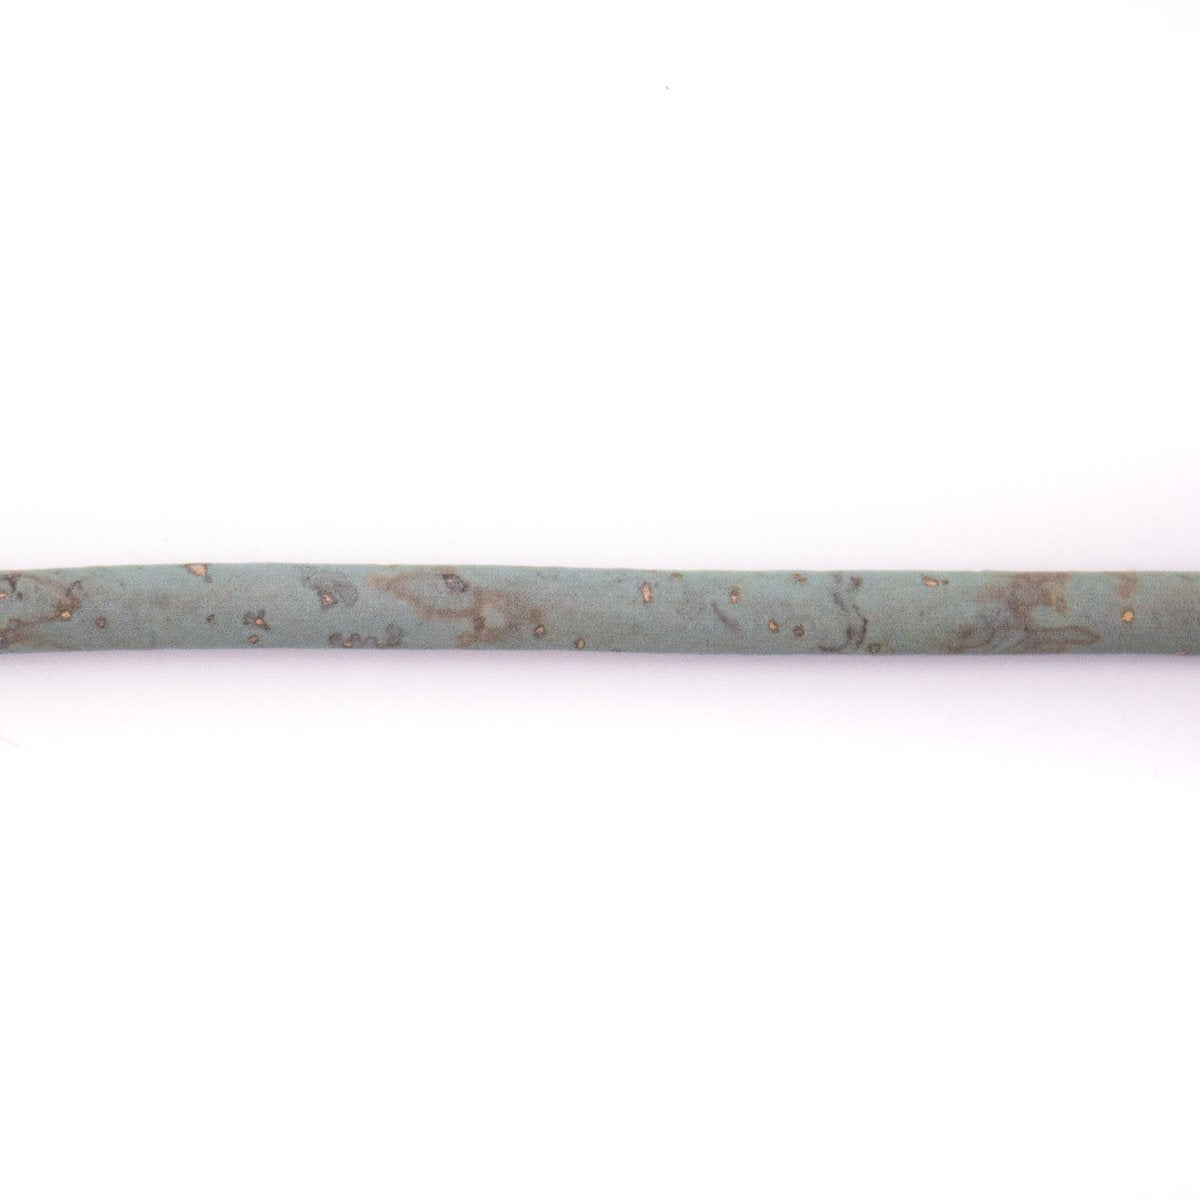 10 mètres de cordon rond en liège naturel bleu clair 5 mm COR-441 